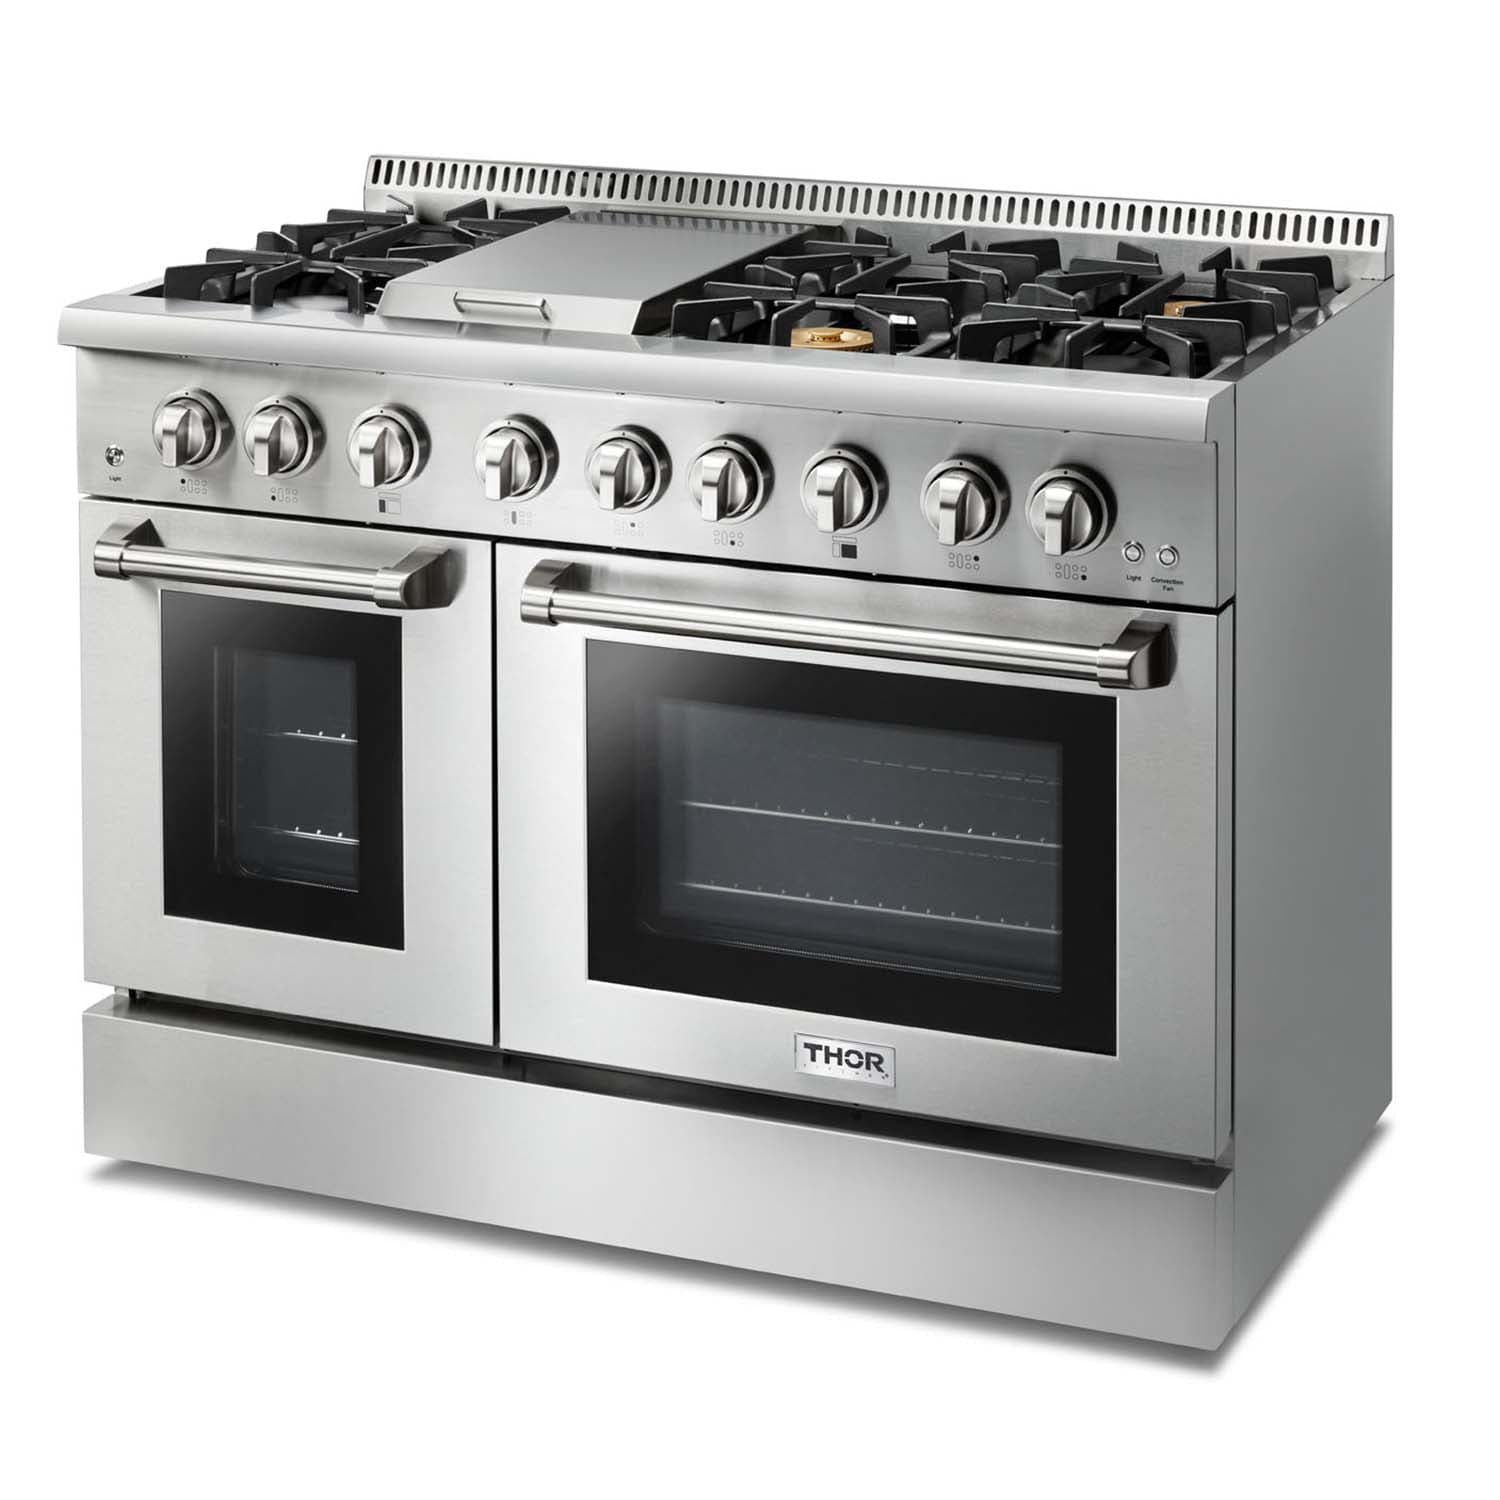 Thor Kitchen 48 in. Natural Gas Burner/Electric Oven 6.7 cu. ft. Range in Stainless Steel HRD4803U Ranges HRD4803U Luxury Appliances Direct